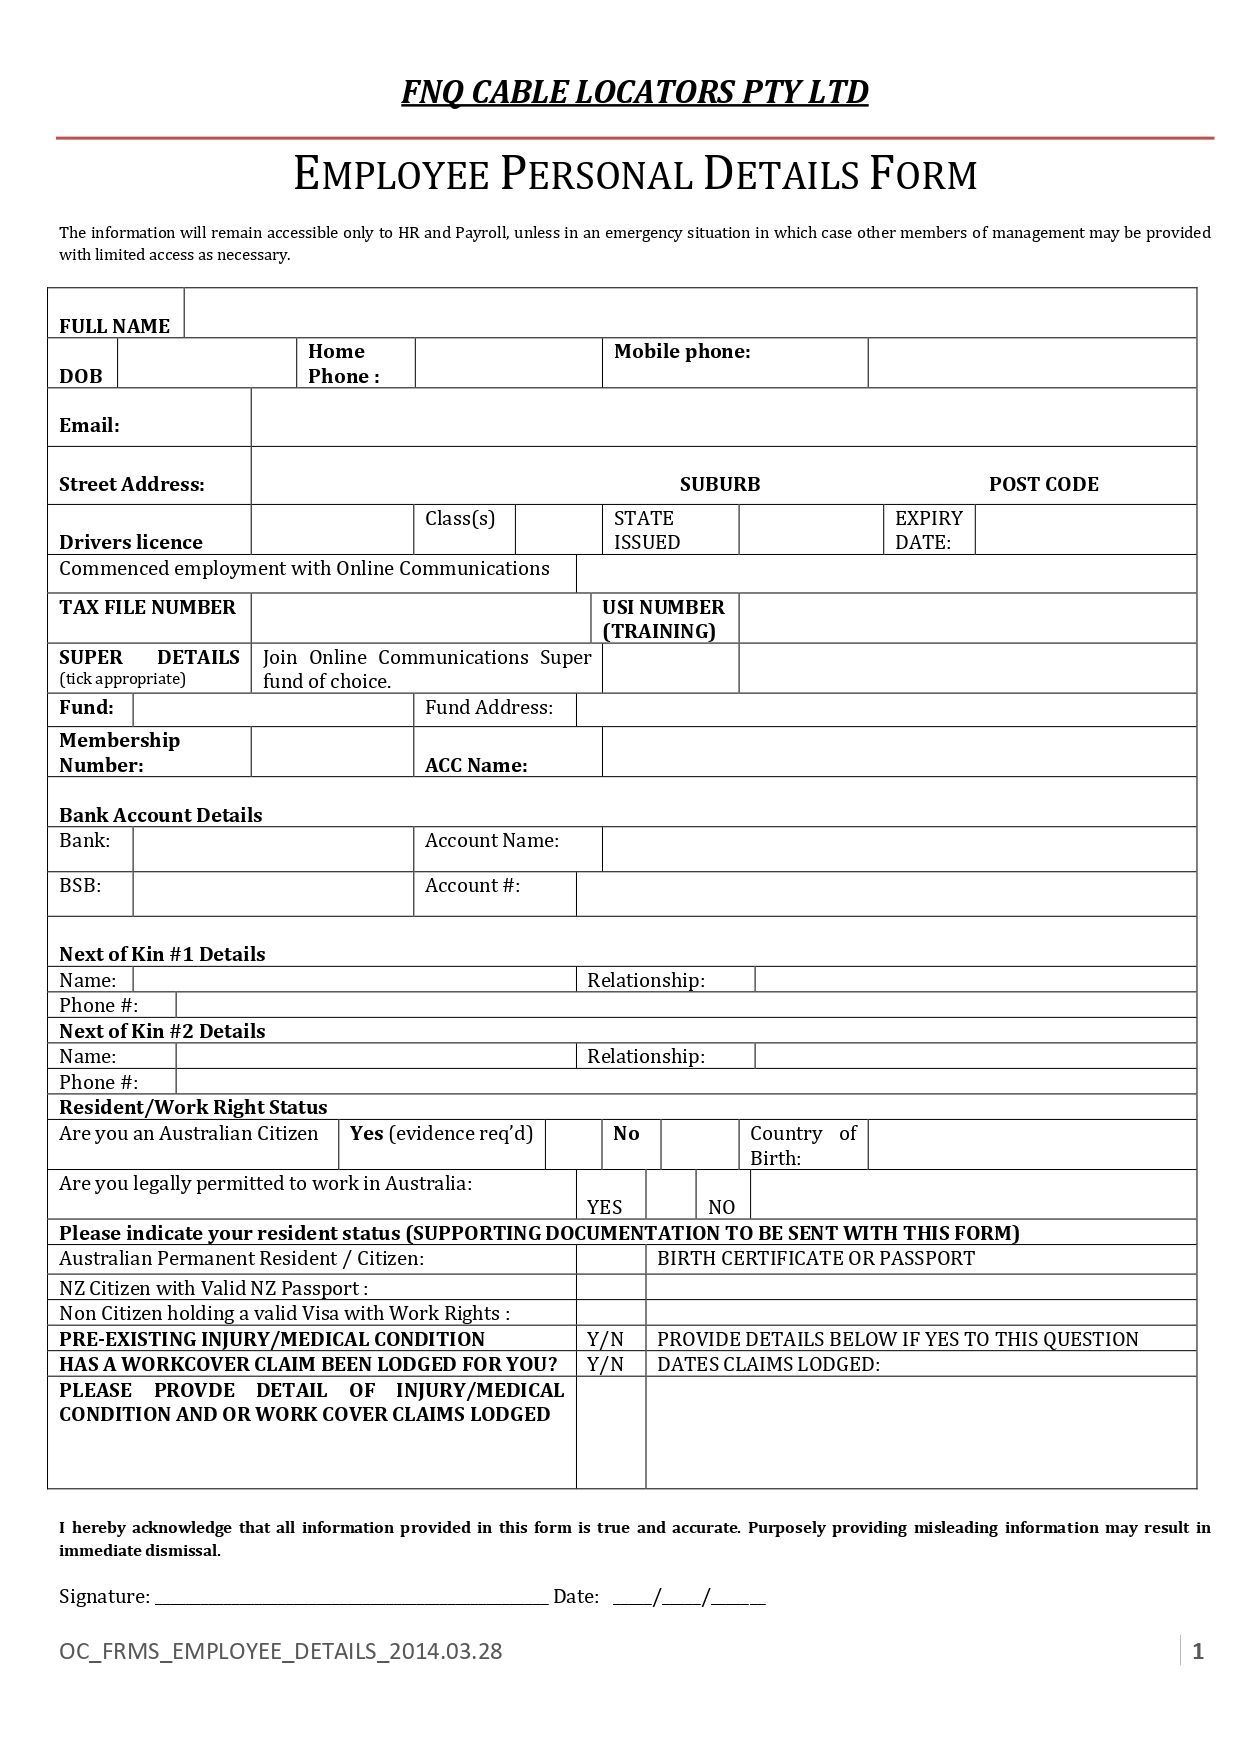 Employee Personal Details Form — Mareeba, QLD — FNQ Cable Locators